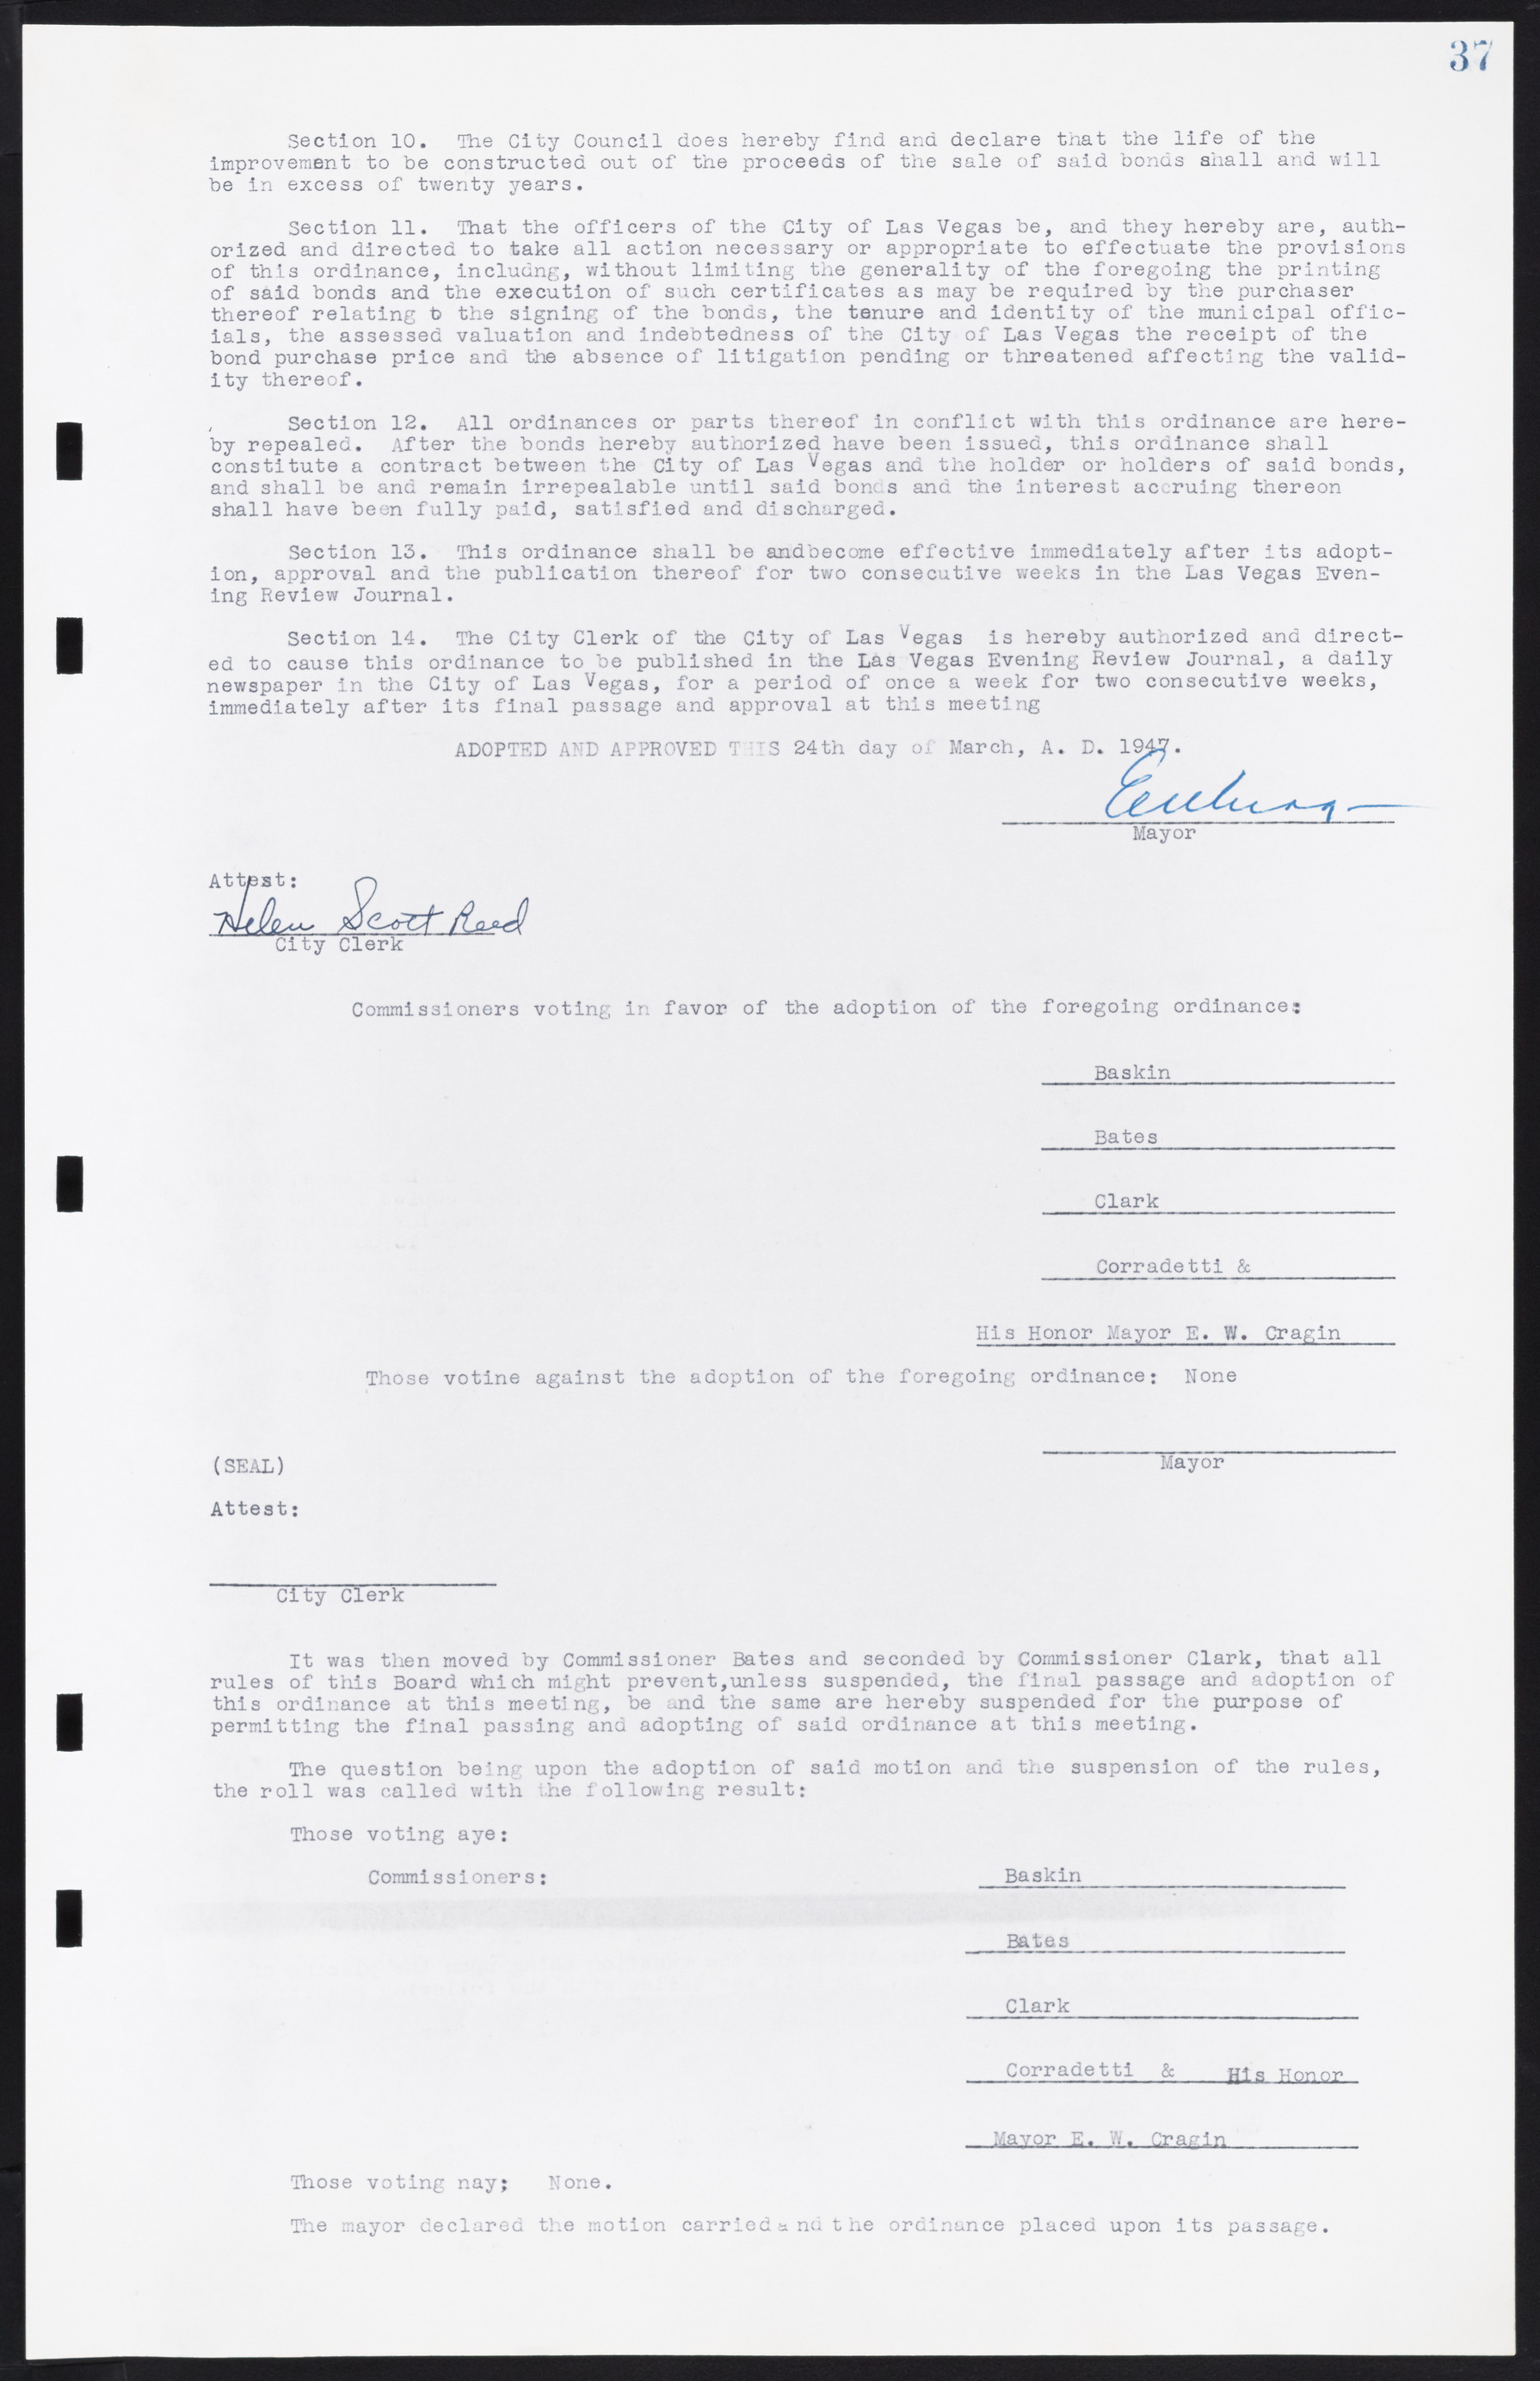 Las Vegas City Commission Minutes, January 7, 1947 to October 26, 1949, lvc000006-52